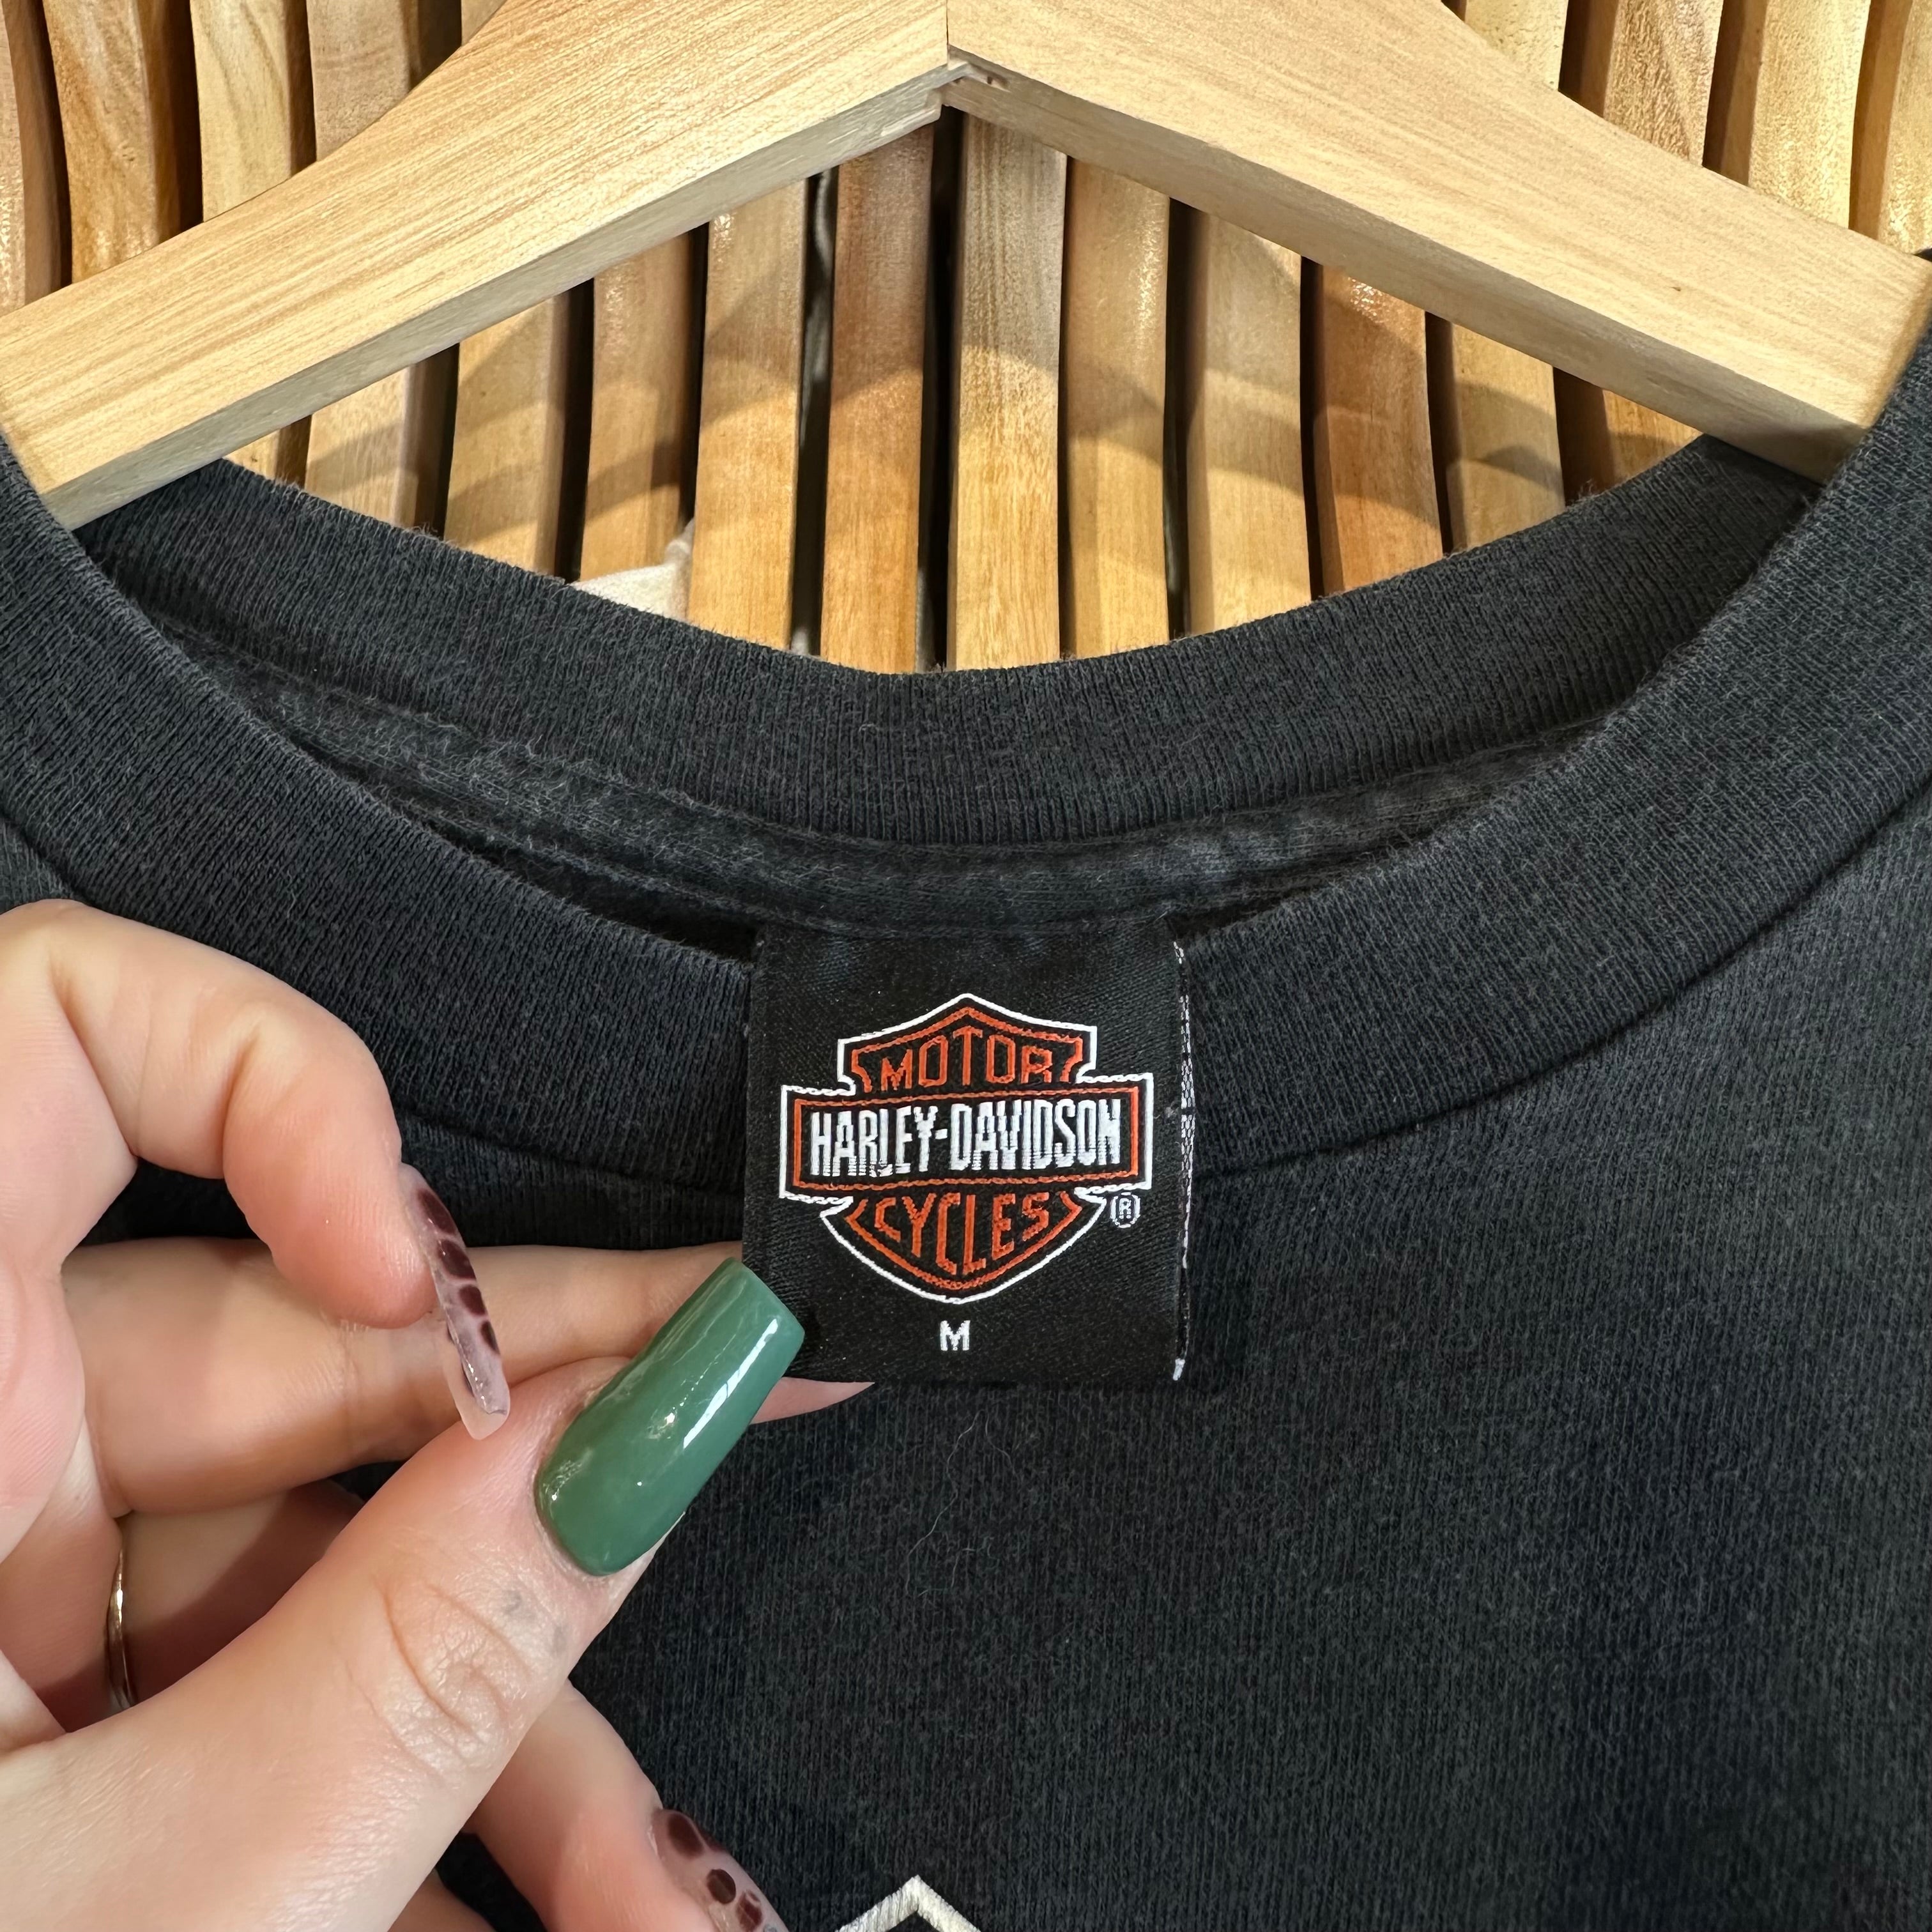 Harley Davidson Crest Paris, France T-Shirt